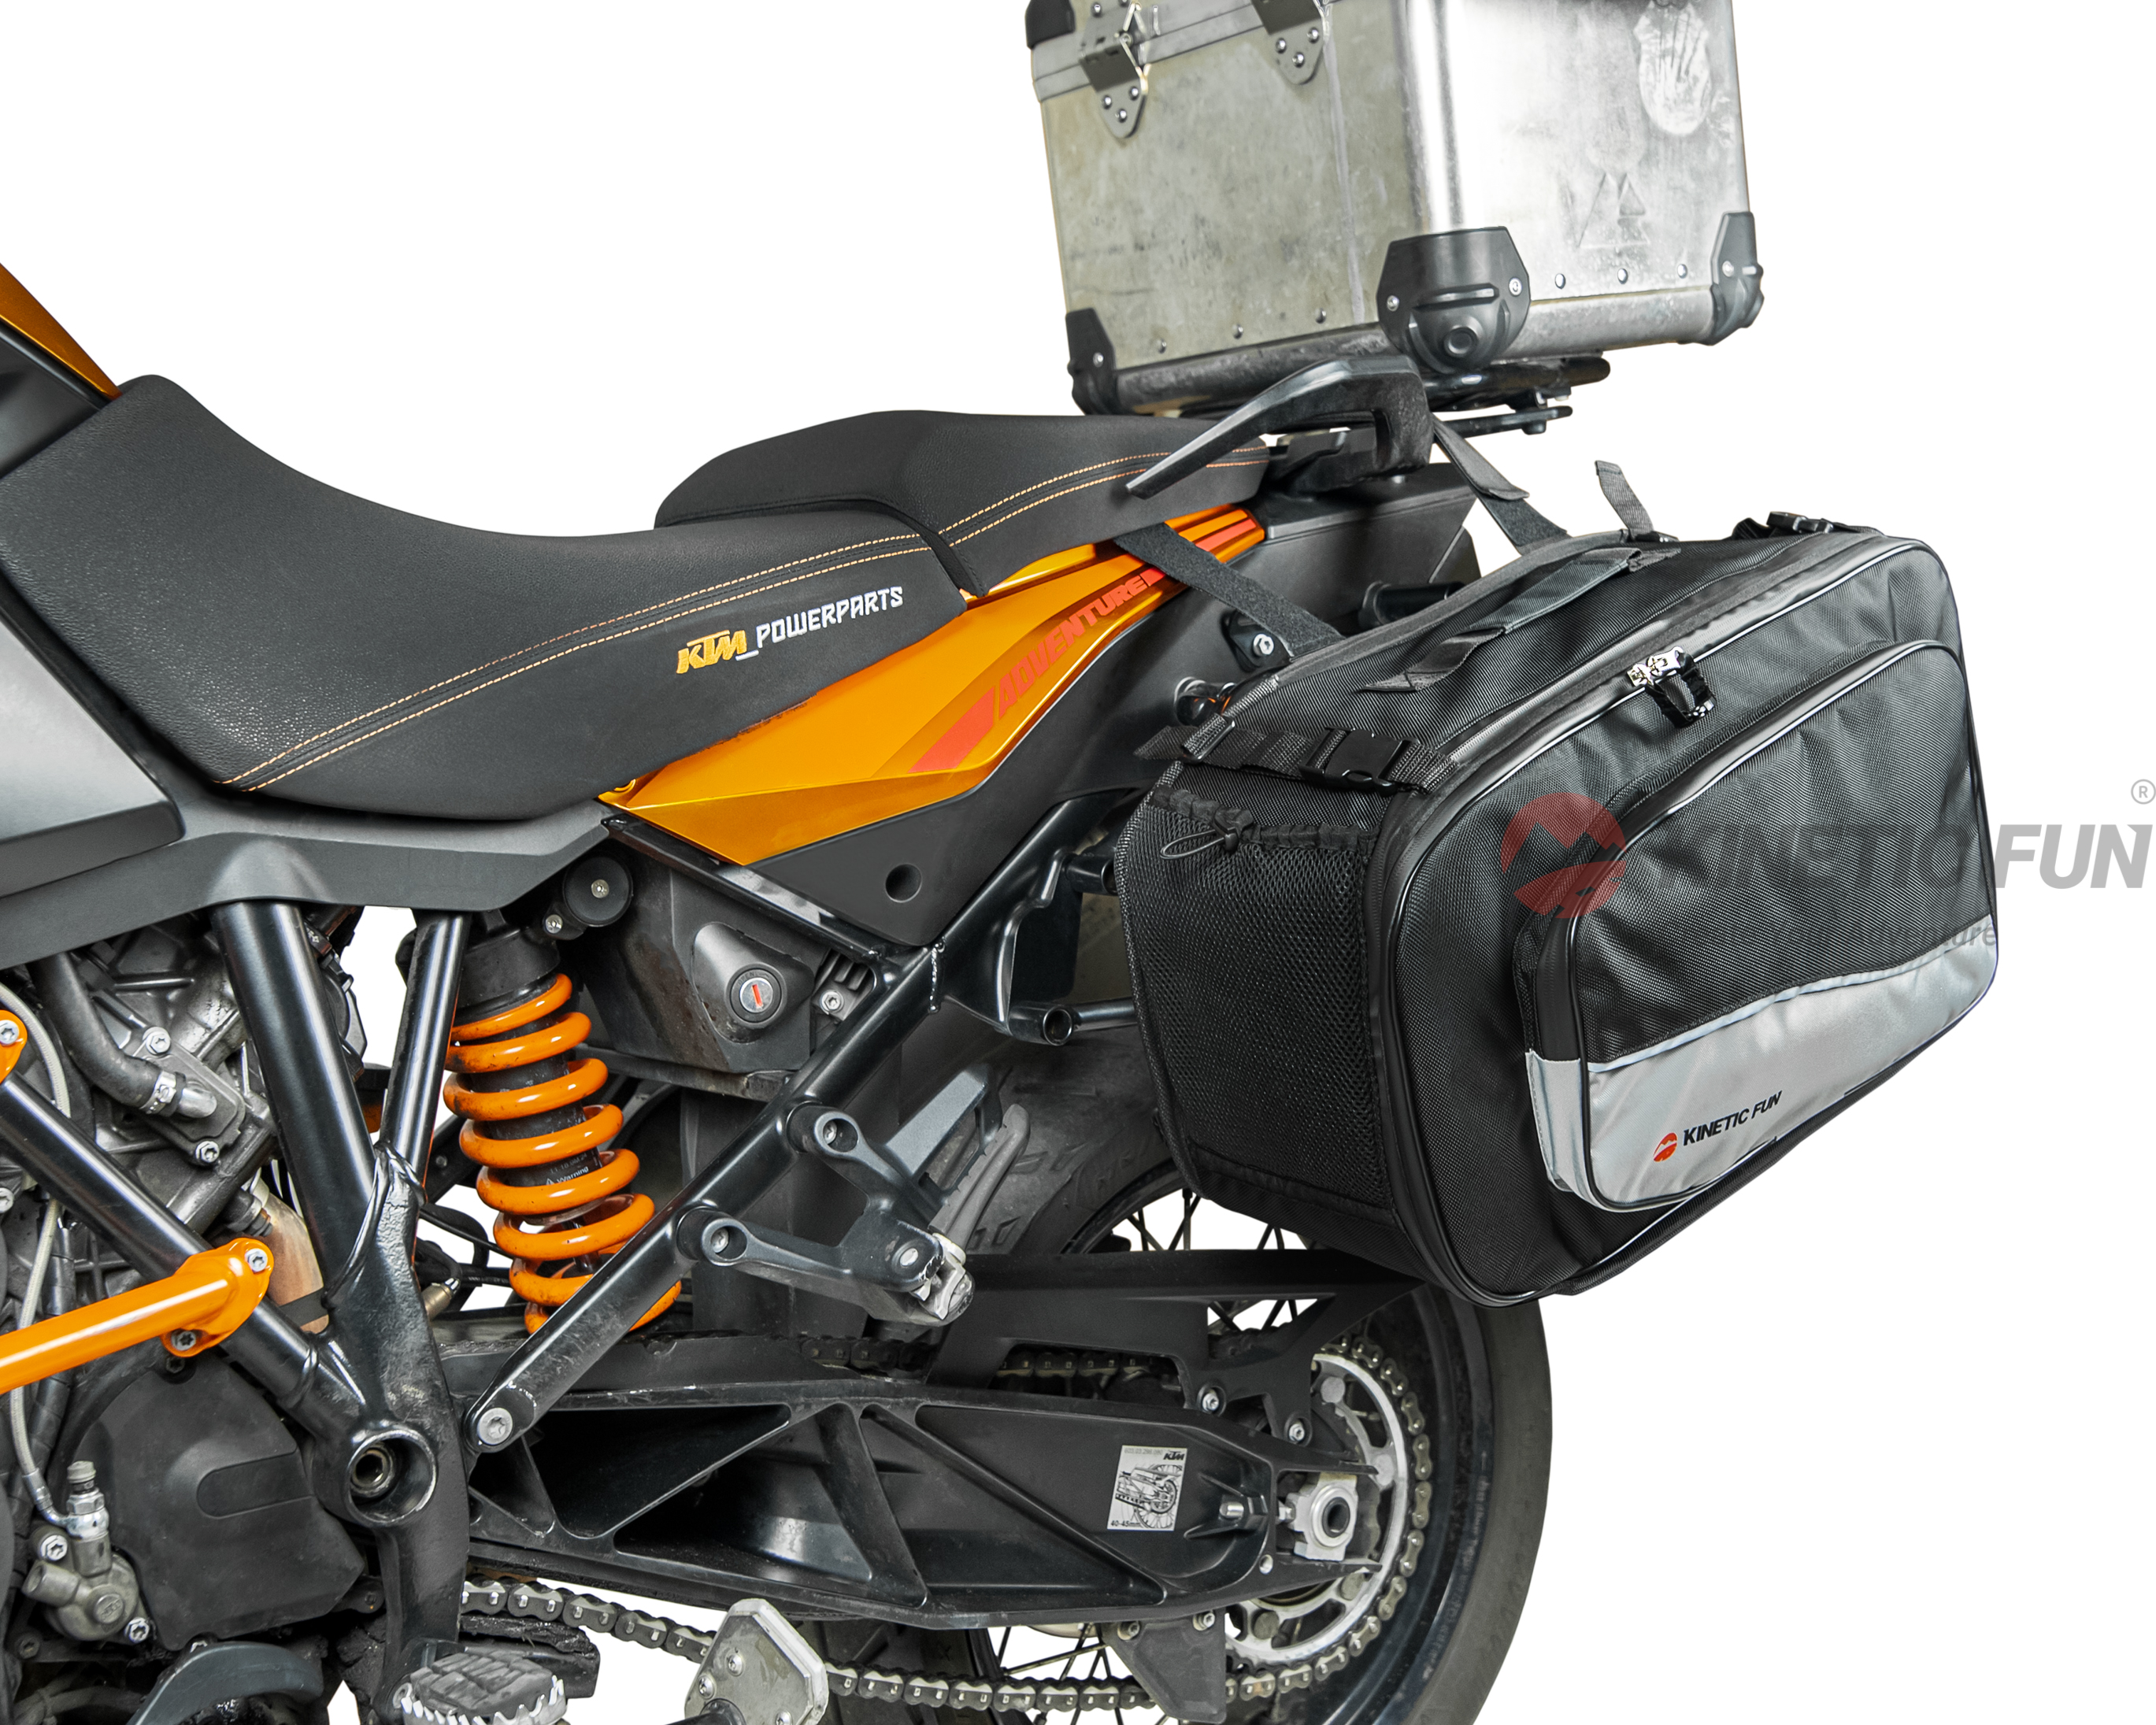 Боковые сумки для мотоцикла Royal Enfield - Модель: XL Evo (пара), объём 46-68 литров